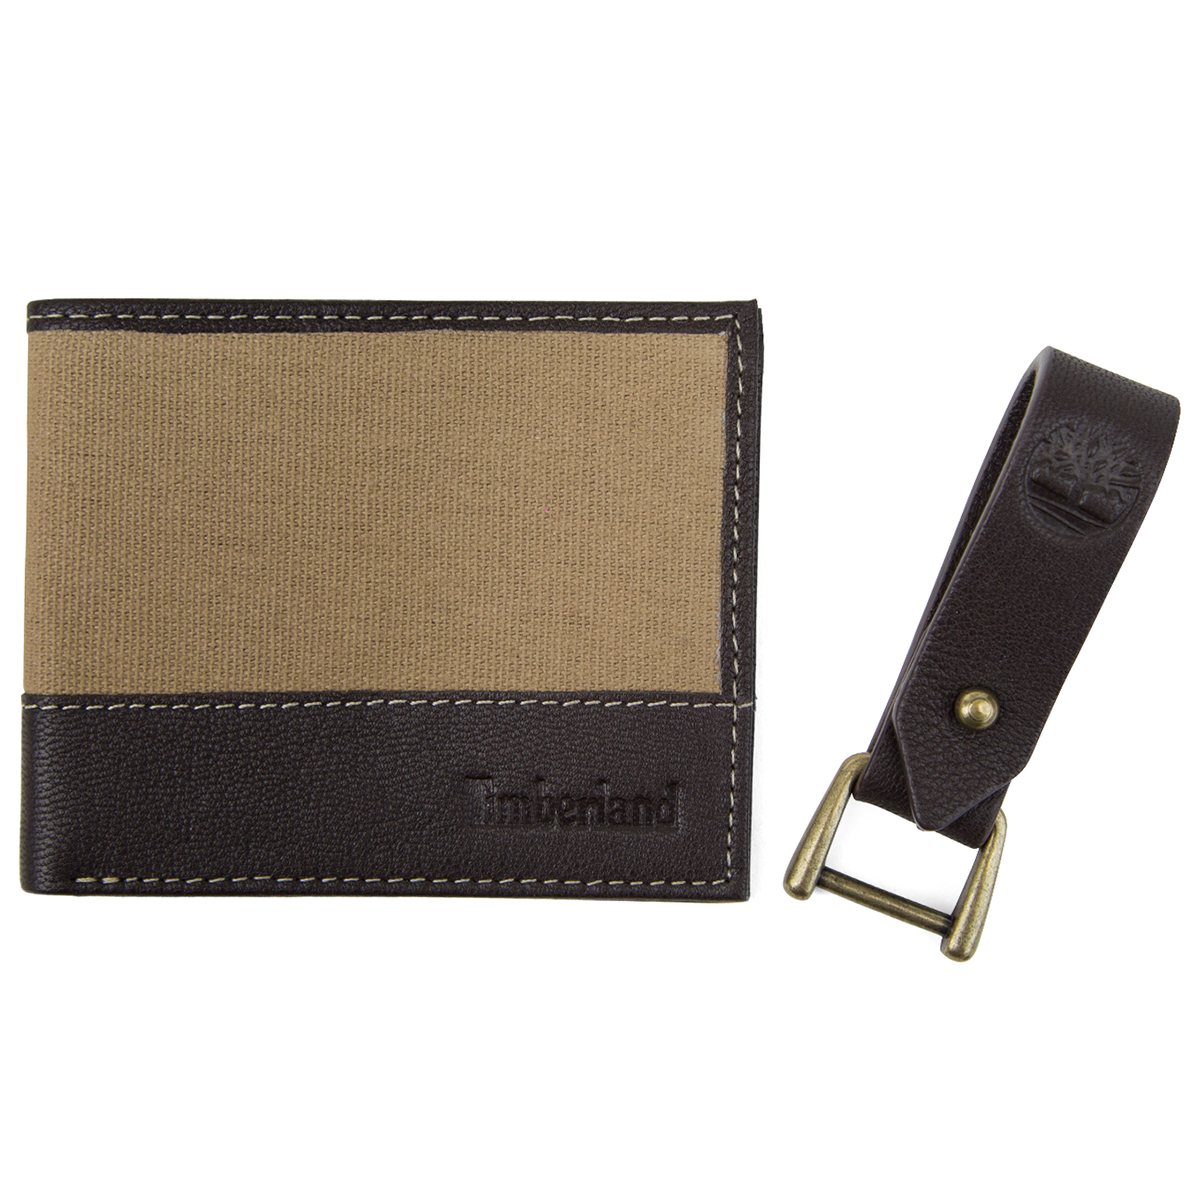 Timberland Men's Leather Billfold Wallet & Key Fob Gift Box Set, Brown